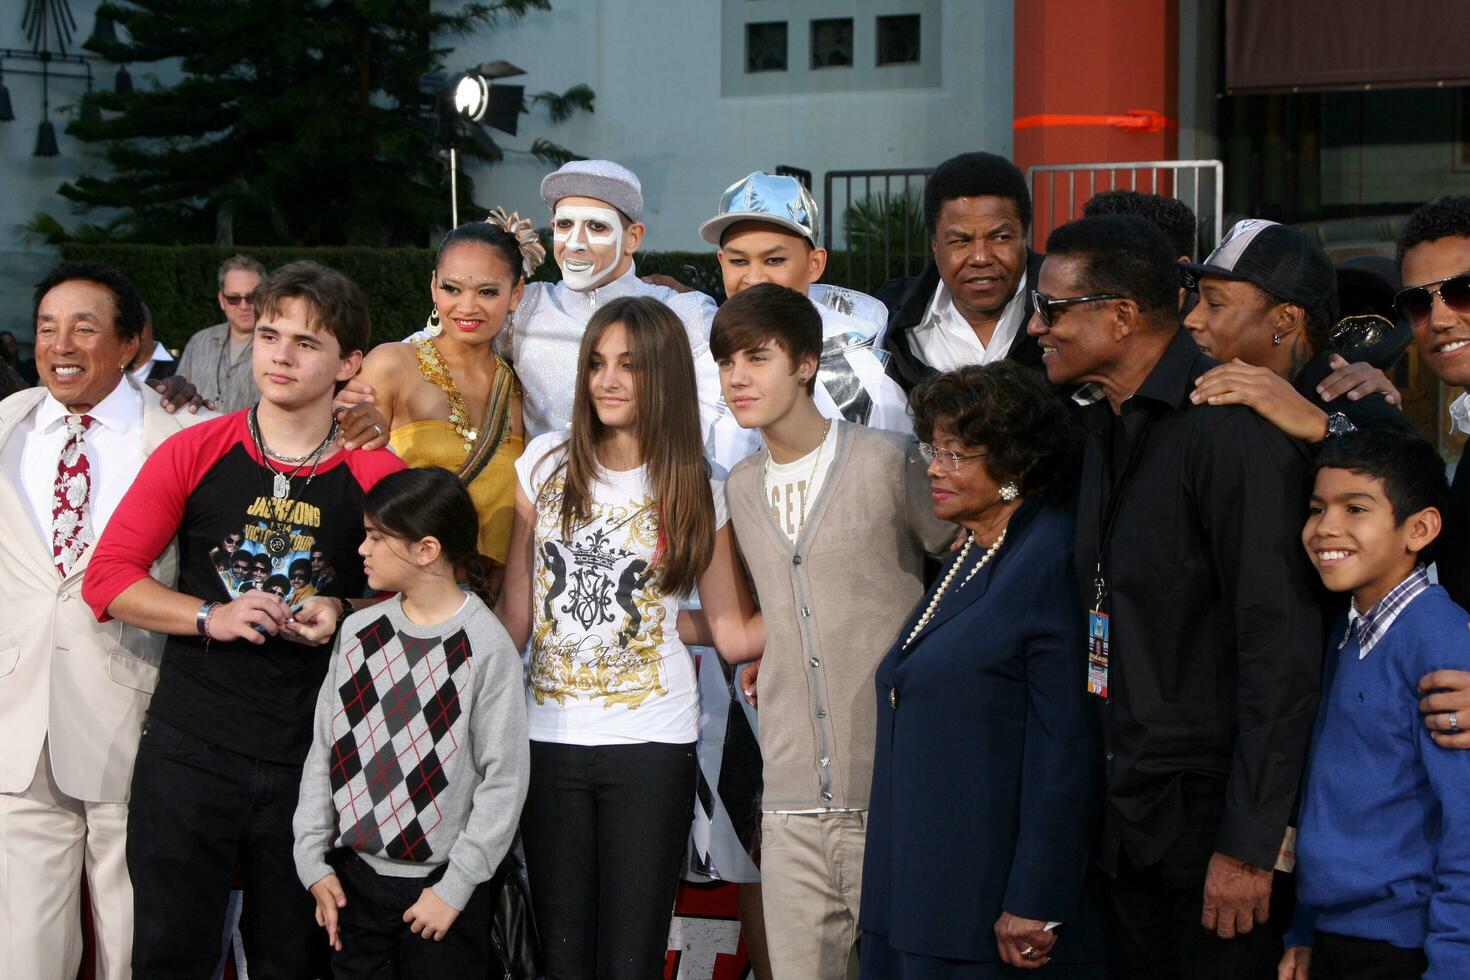 convidados, família, Principe Michael Jackson, Principe Michael Jackson, ii também conhecido como cobertor Jackson, Paris jackson foto